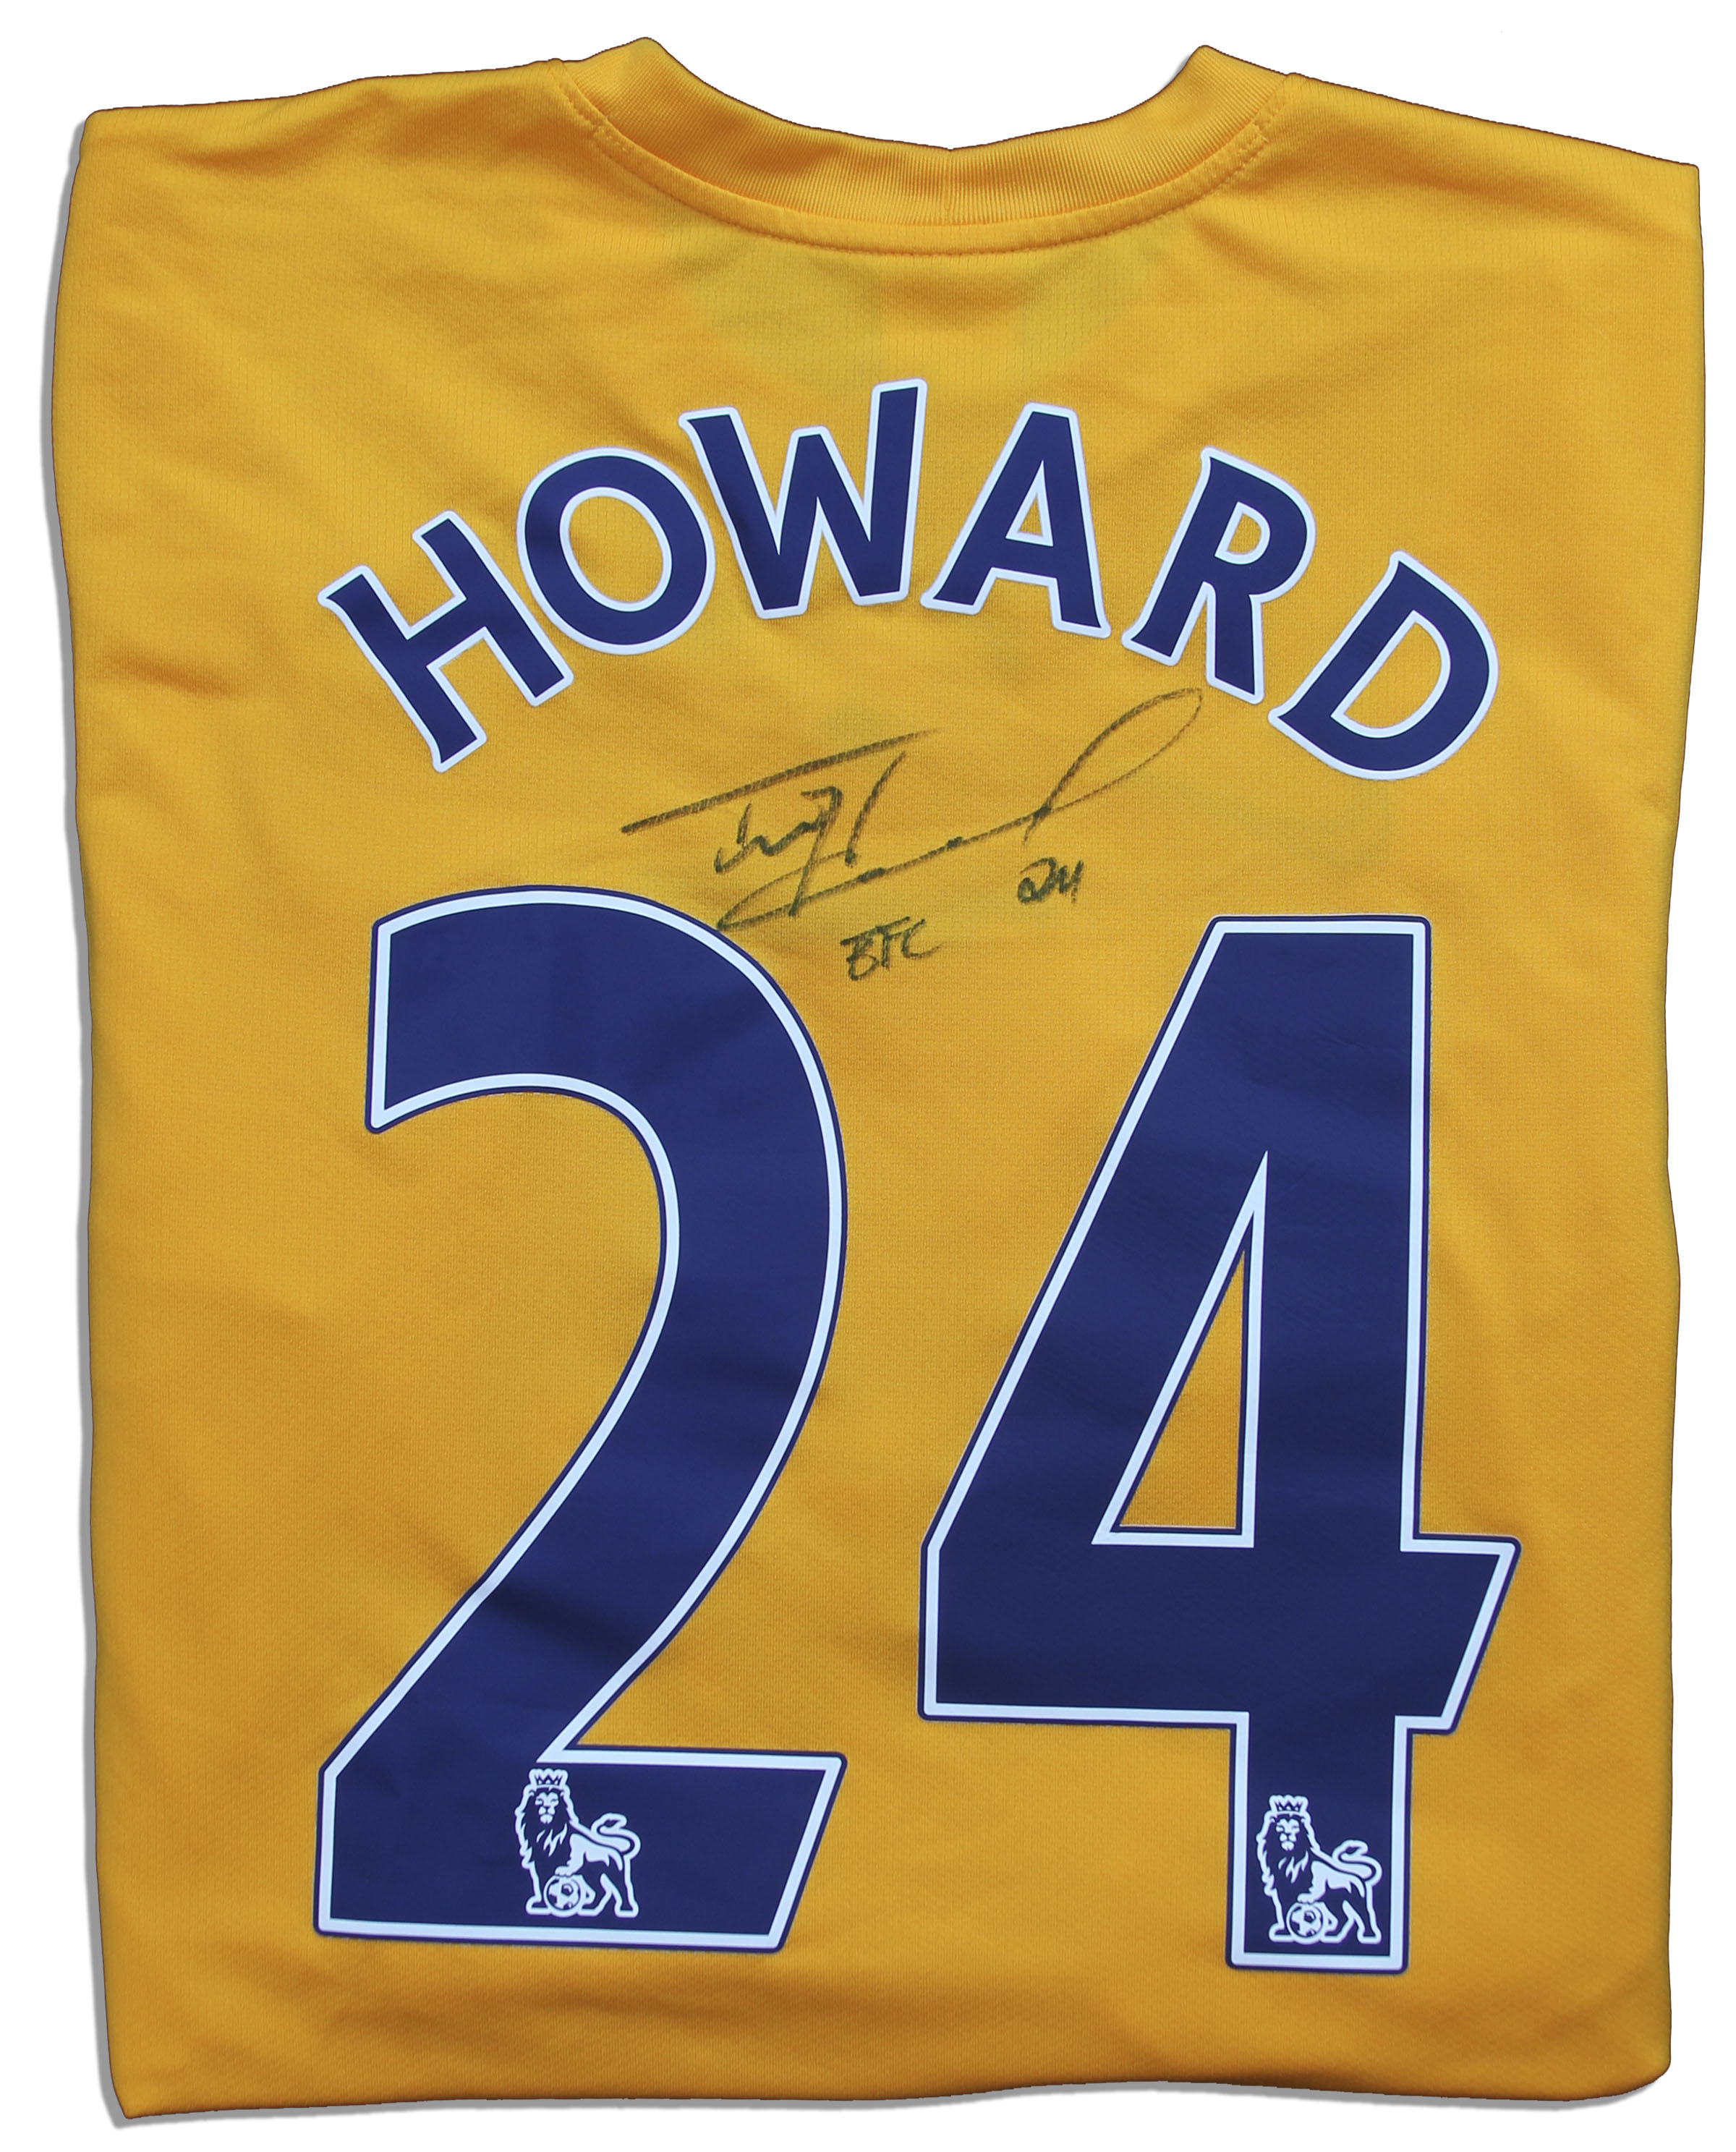 tim howard signed jersey